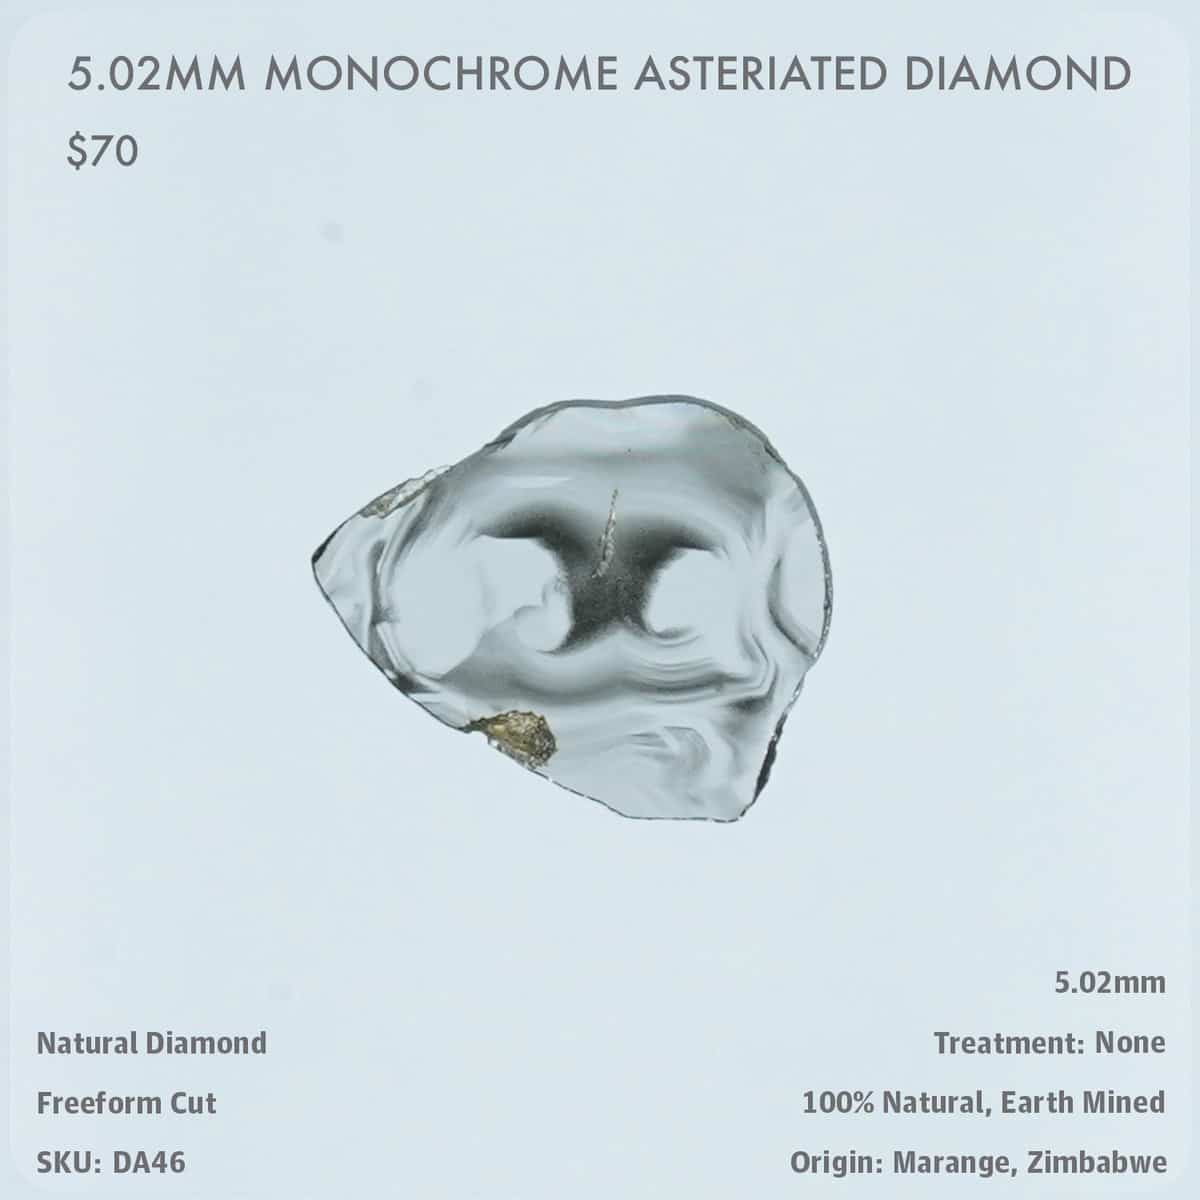 5.02mm Monochrome Asteriated Diamond